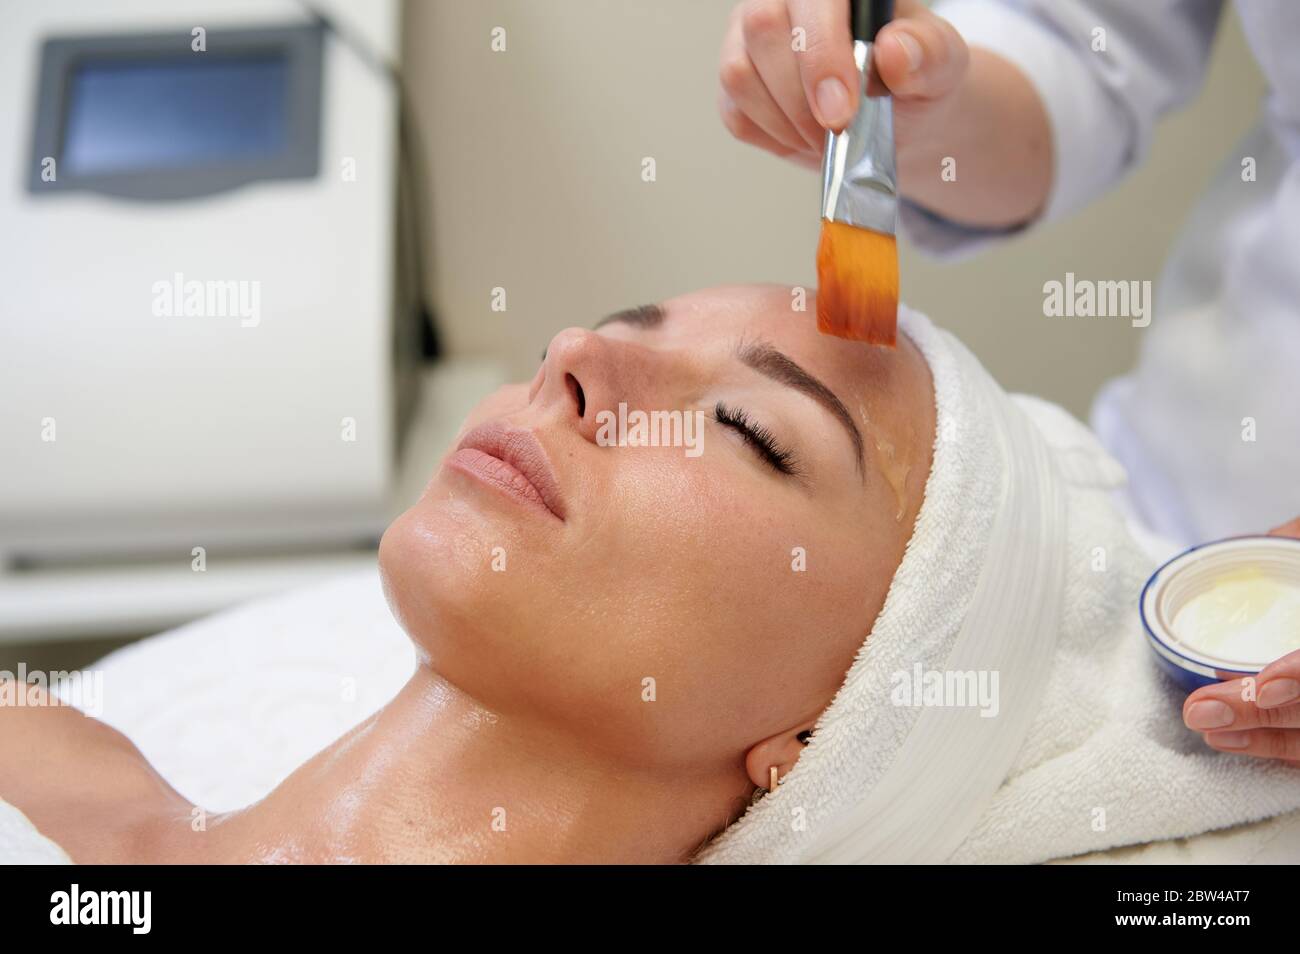 Applying facial mask with orange brush in spa treatment alternative medicine Stock Photo